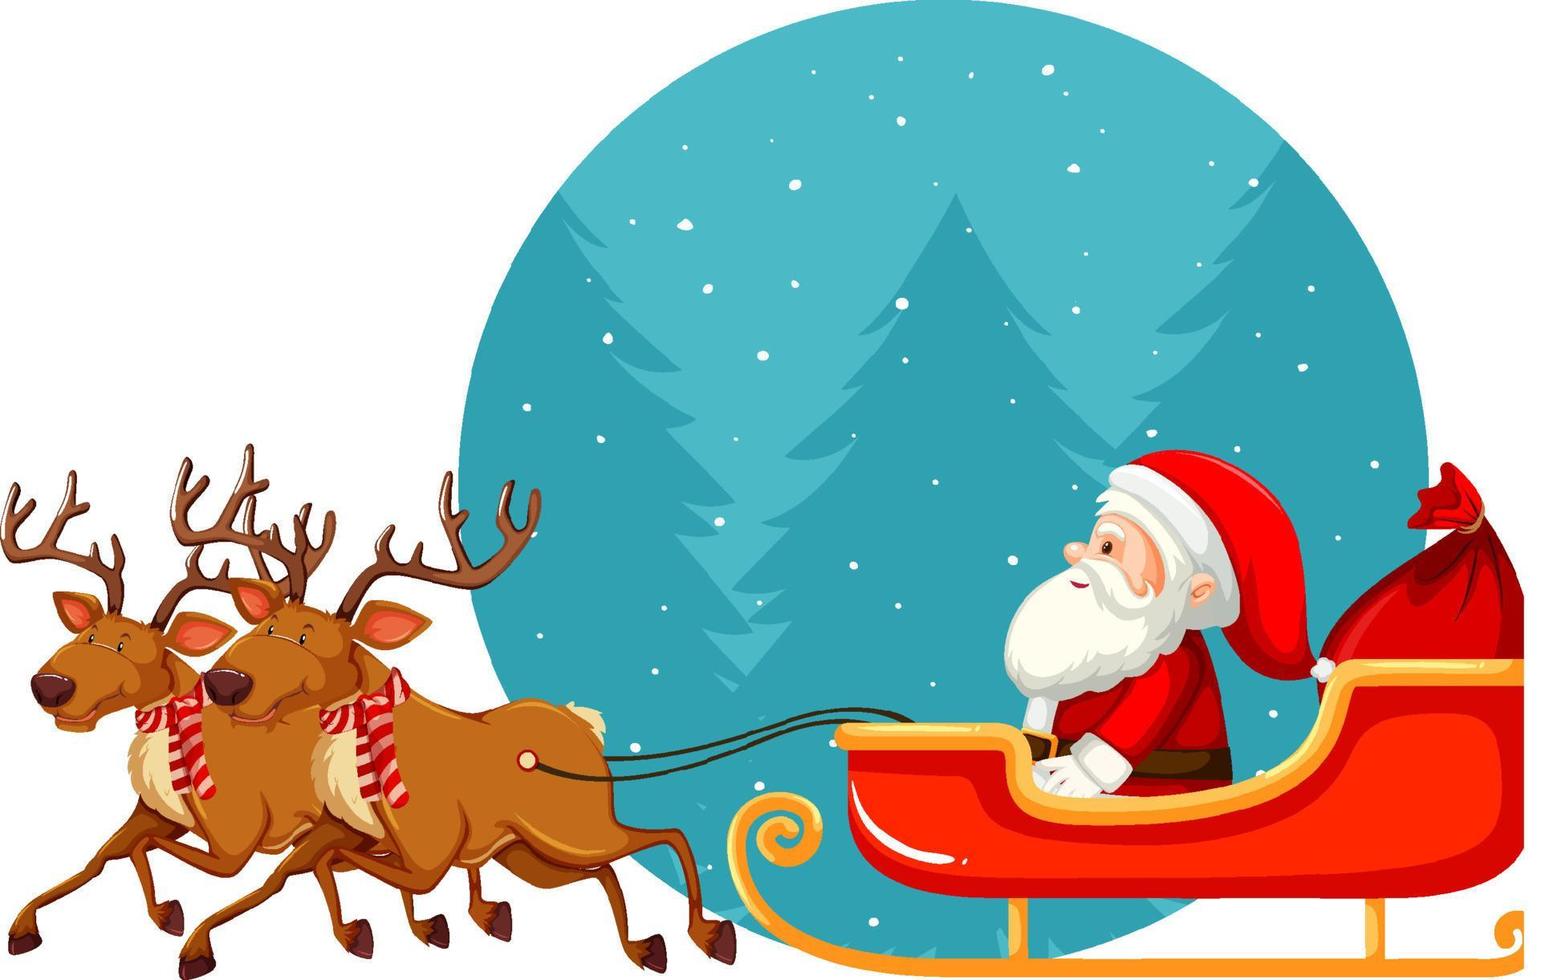 Christmas theme with Santa vector